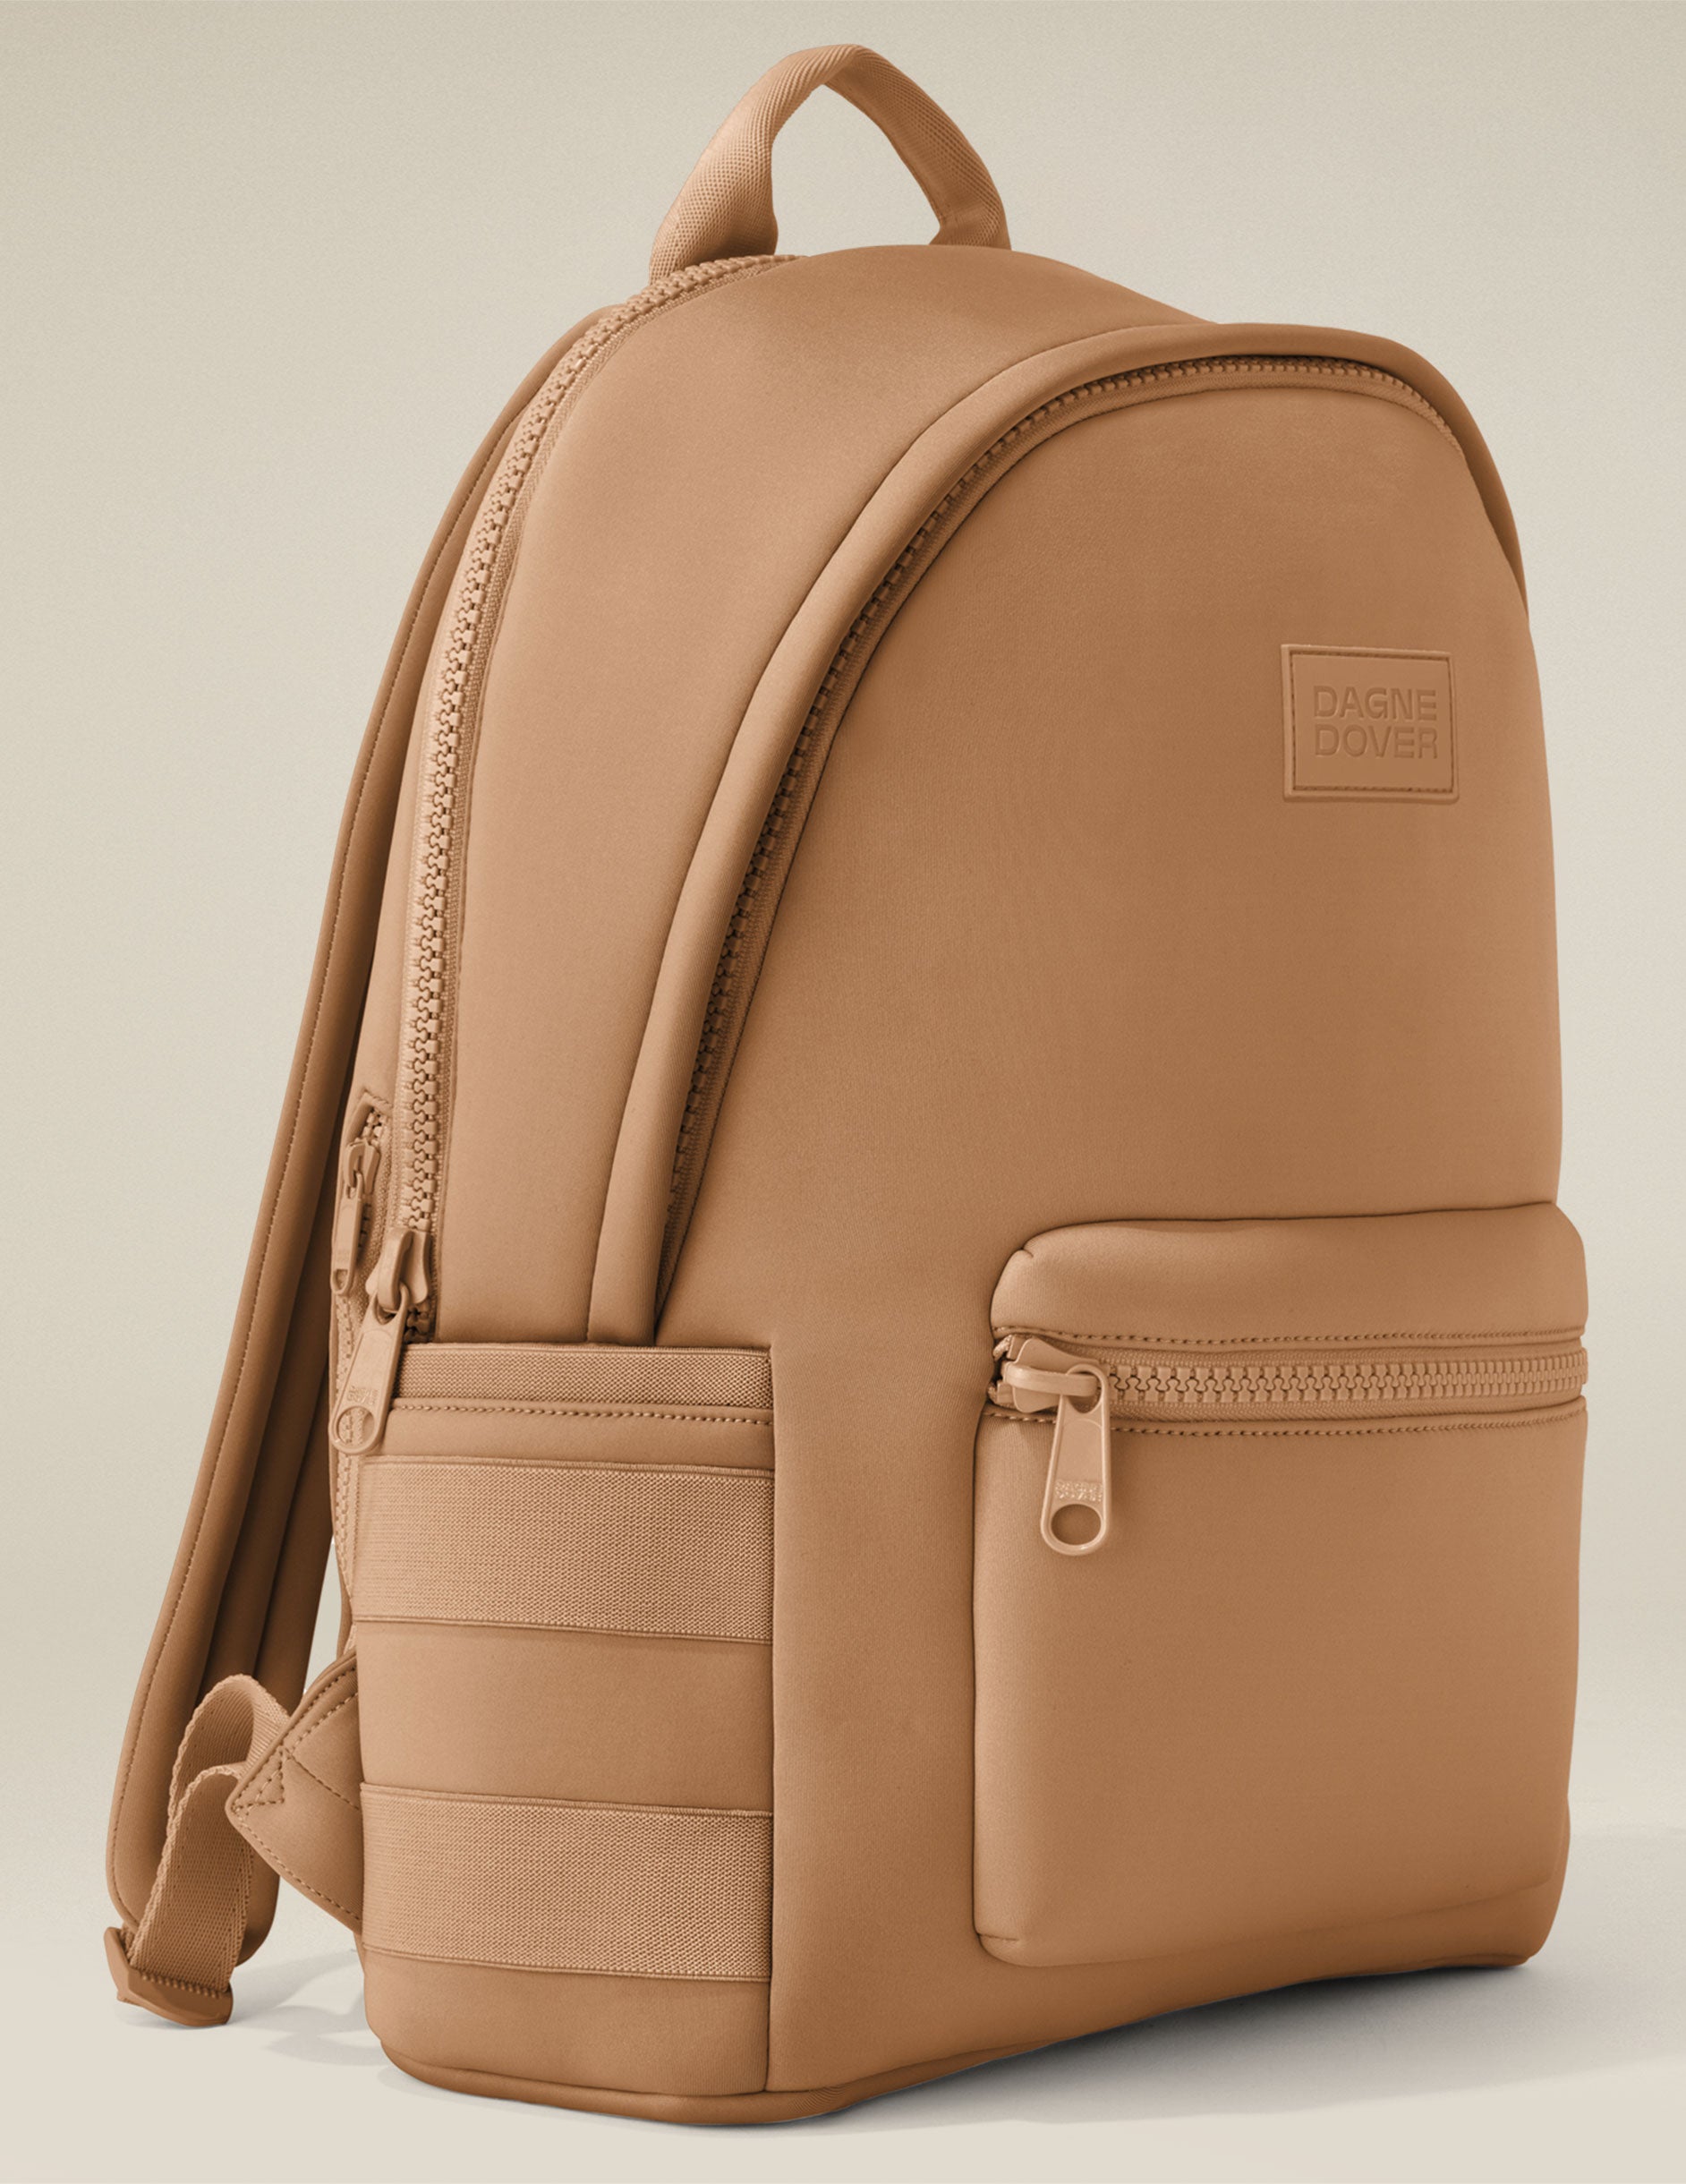 brown dagne dover backpack.  